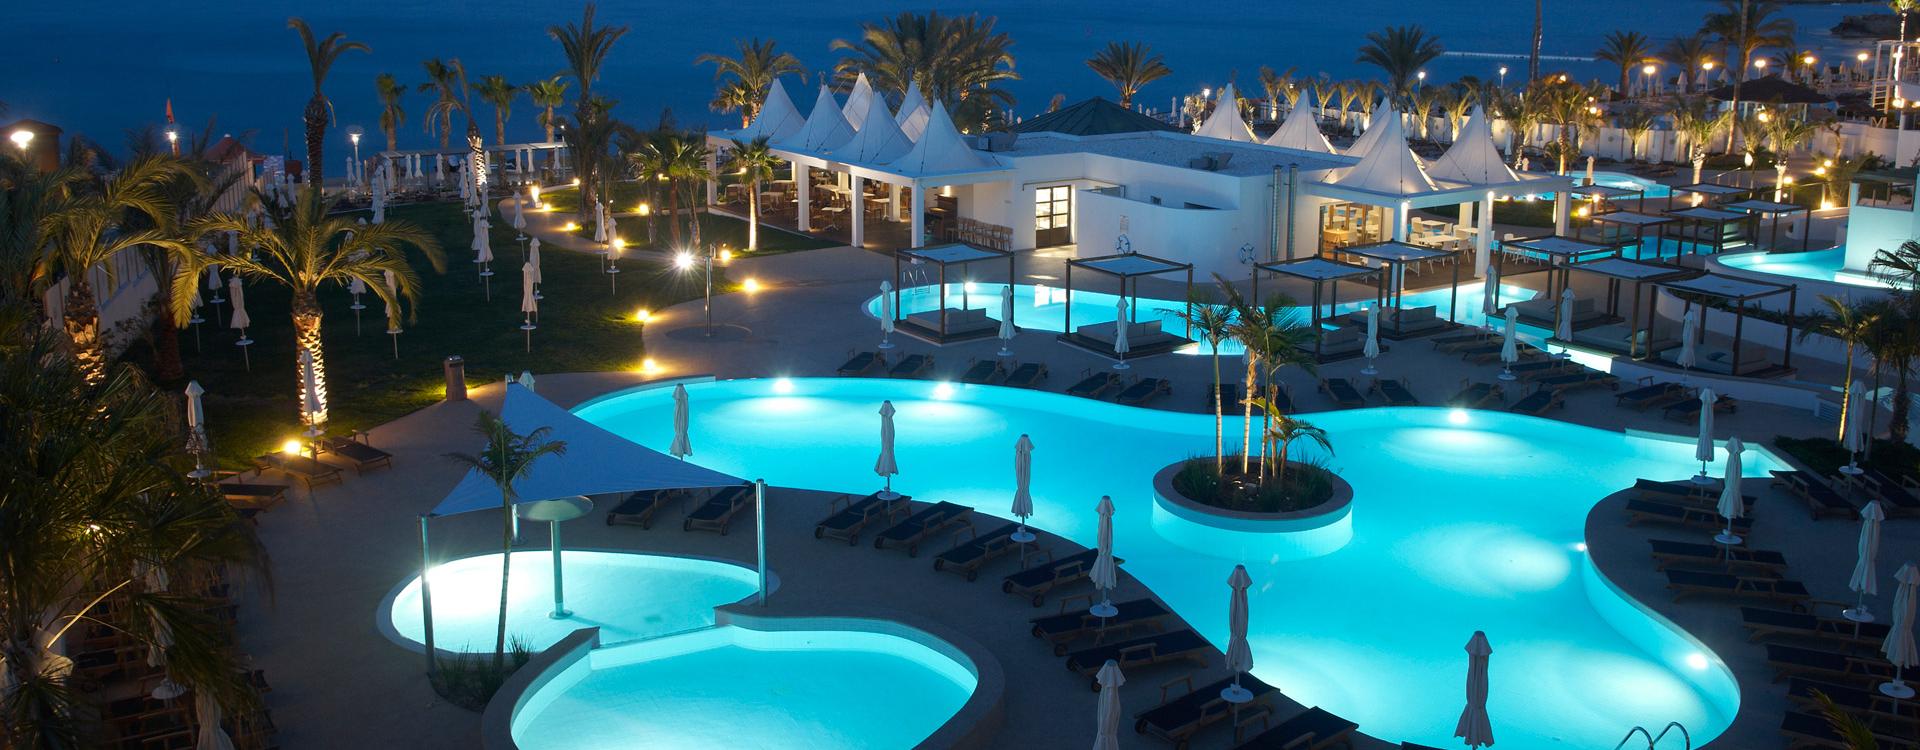 Sunrise Pearl Hotel & Spa, Protaras, Cyprus